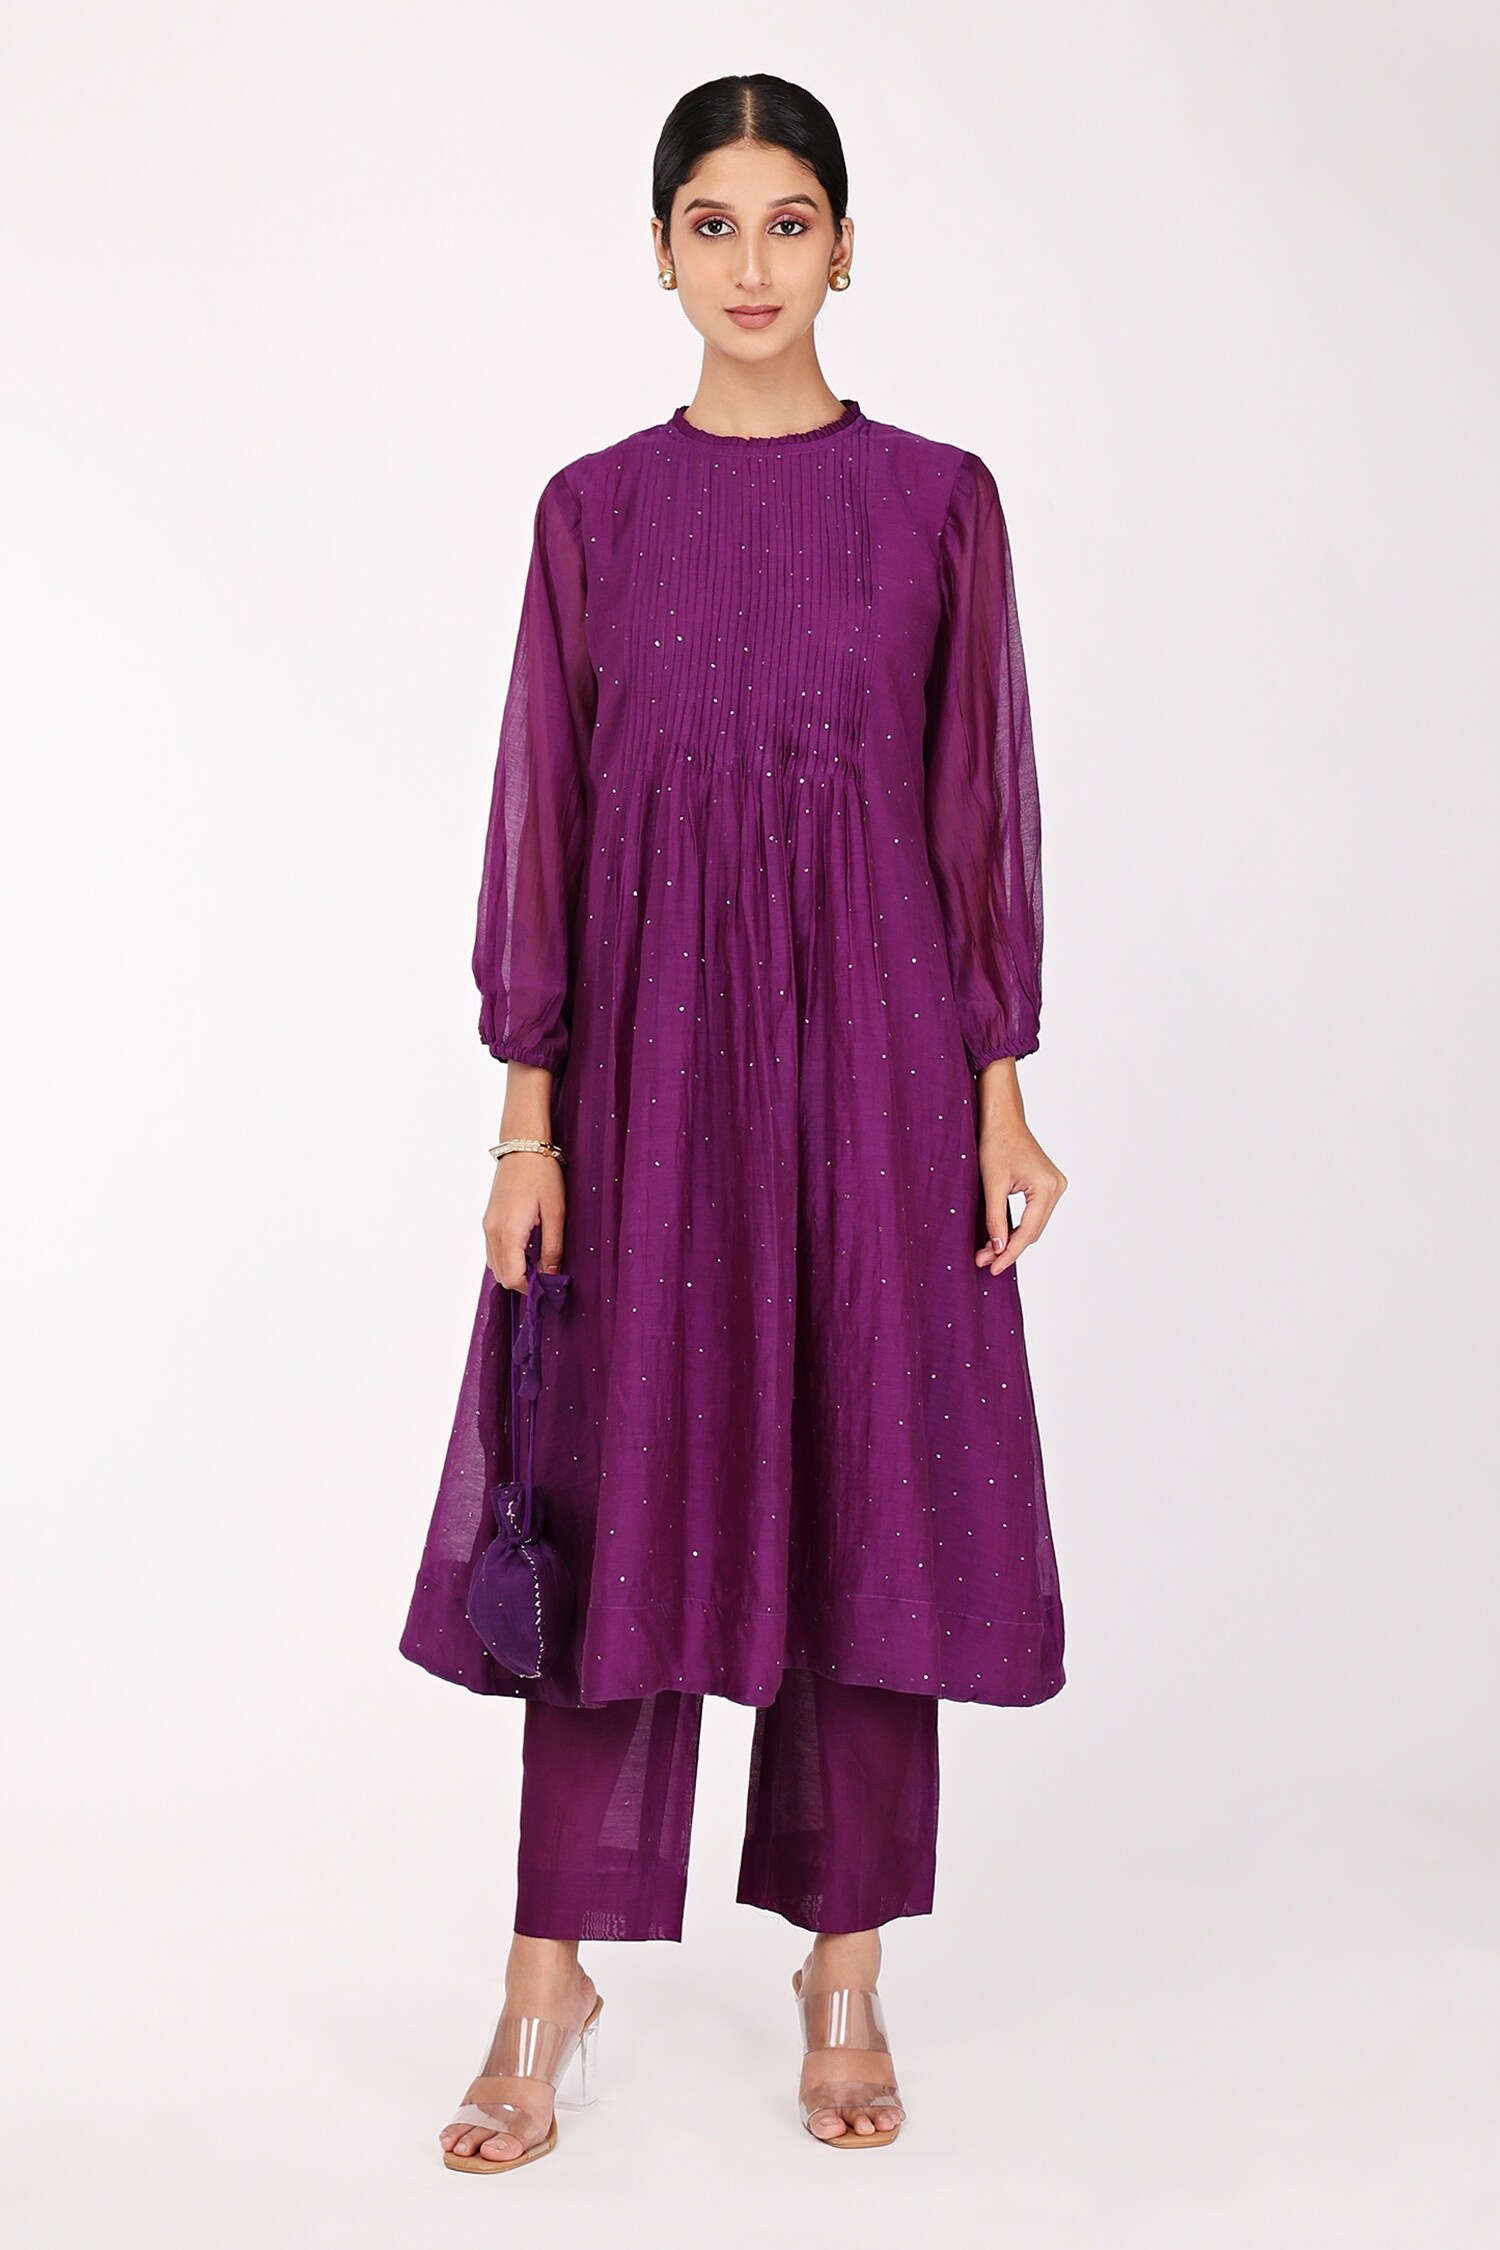 Komal Shah Purple Embroidered Tunic And Pant Set